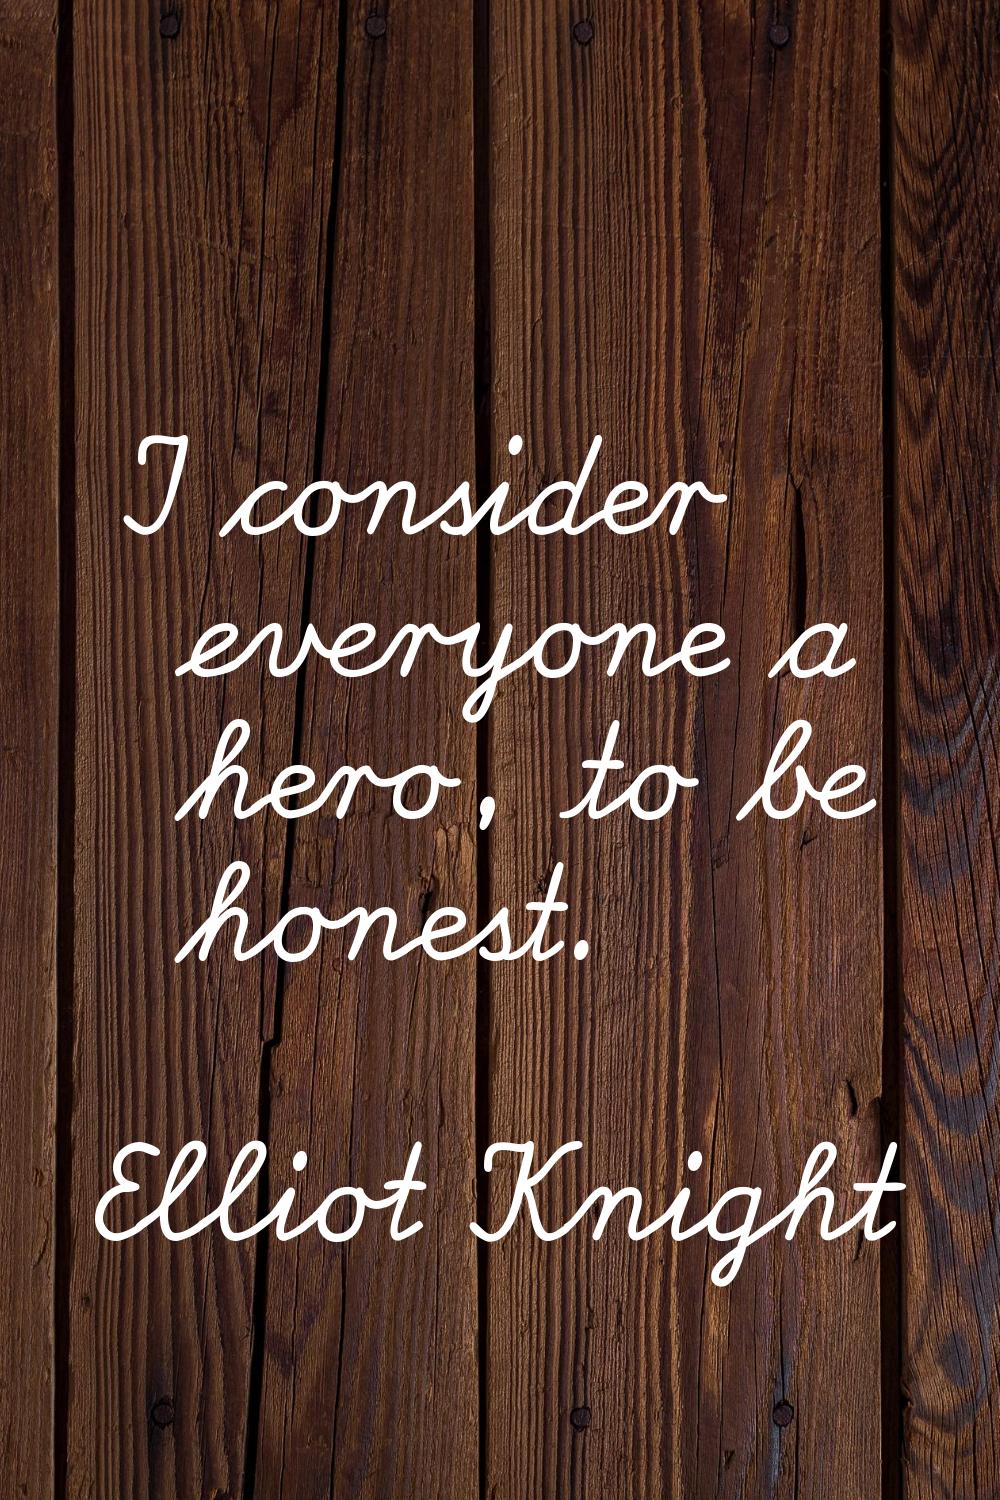 I consider everyone a hero, to be honest.